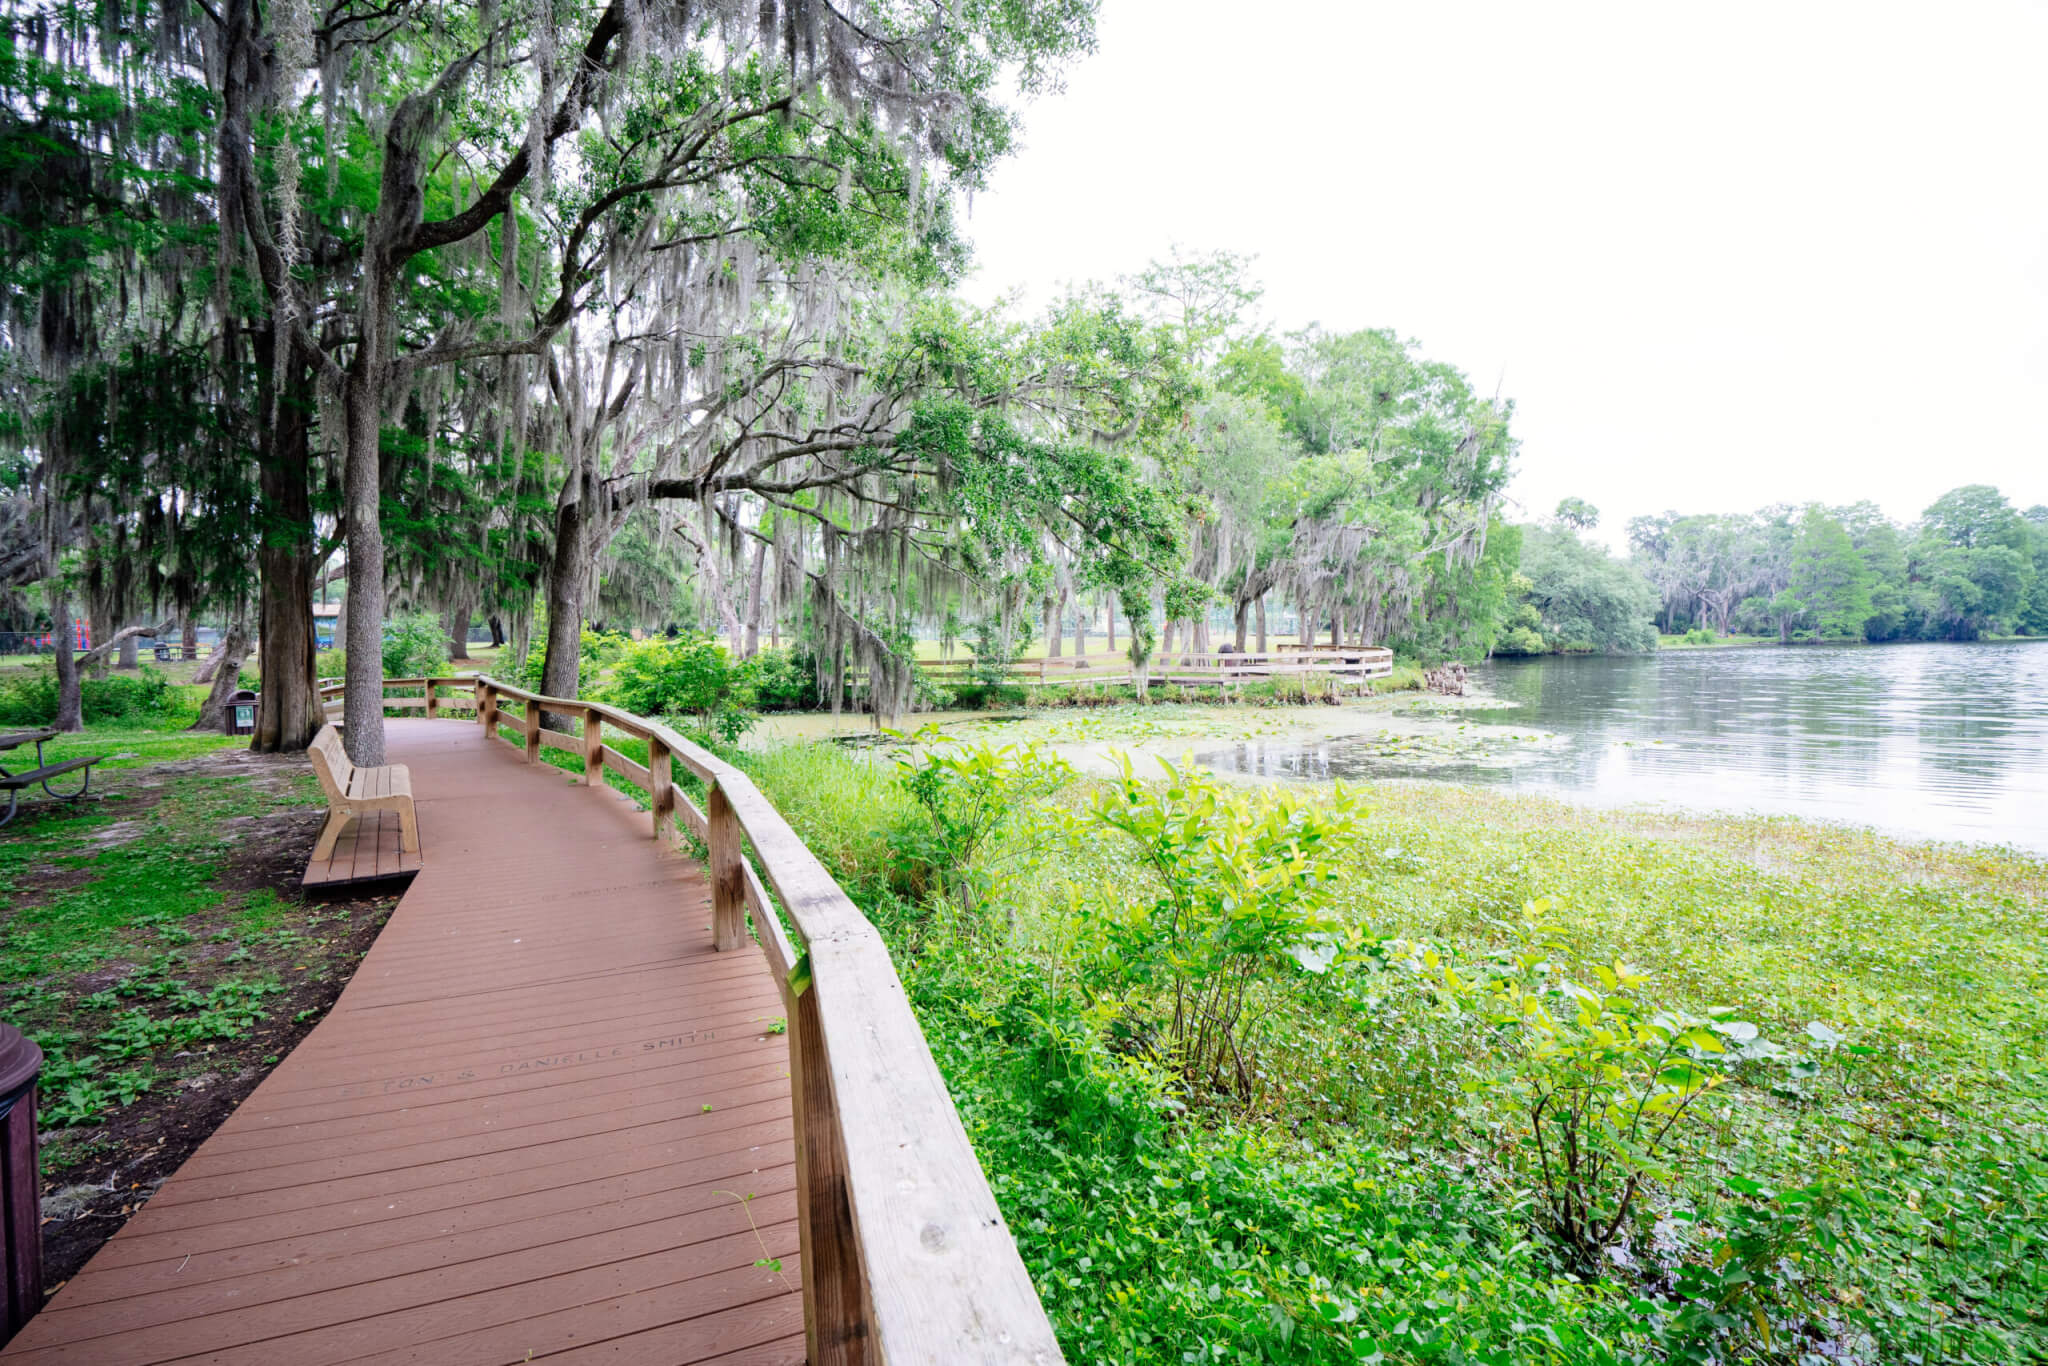 The landscape of Hillsborough river bank at Tampa, Florida